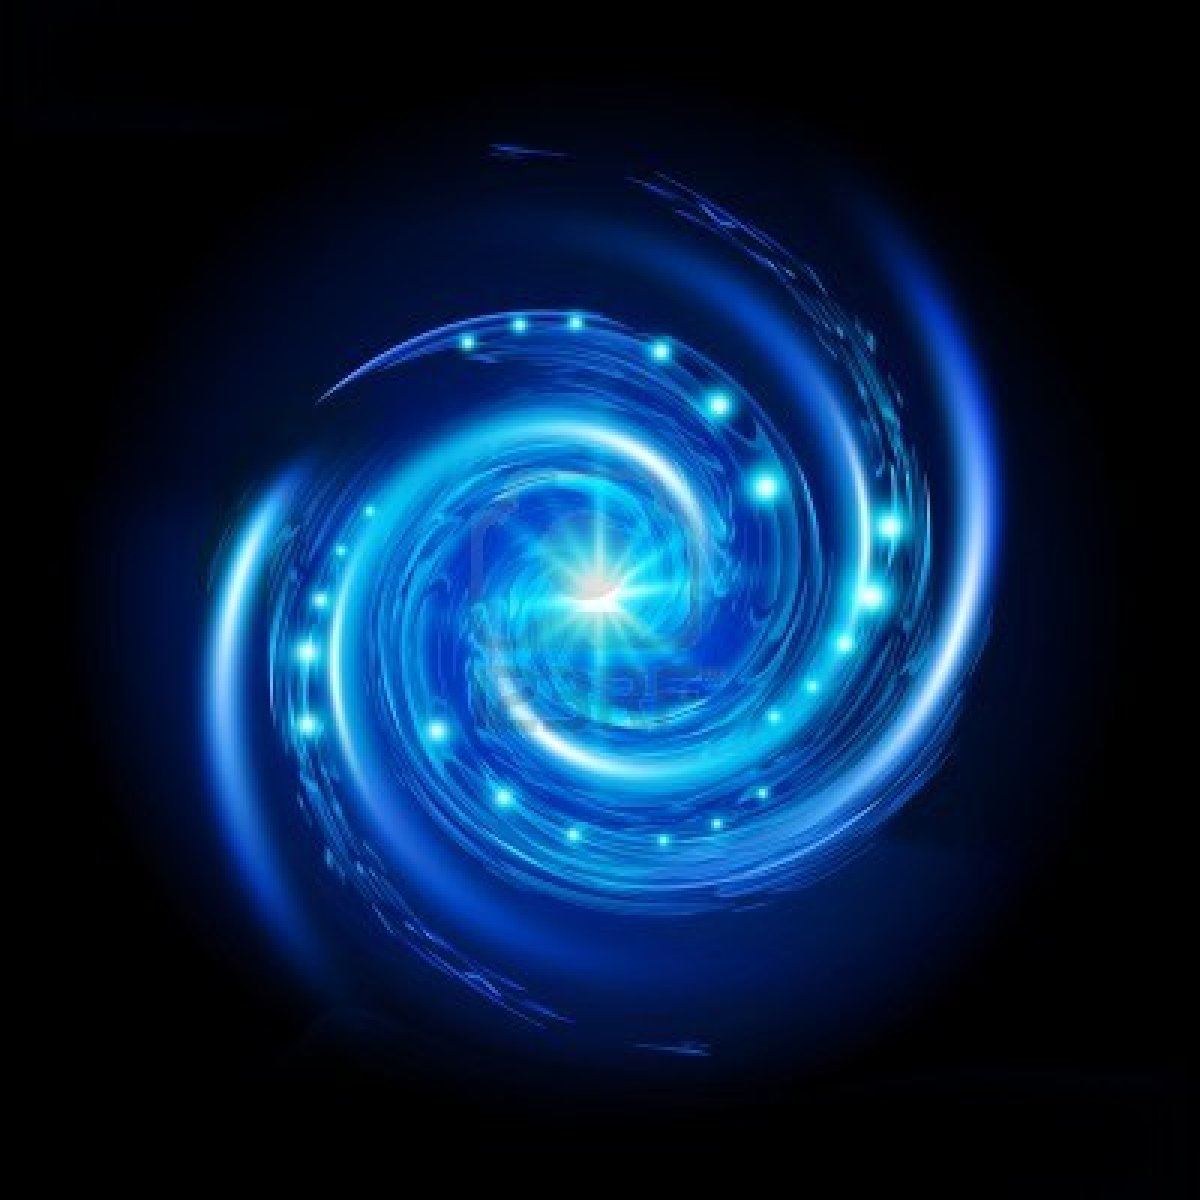 14853764-blue-spiral-vortex-with-stars-illustration-on-black-background